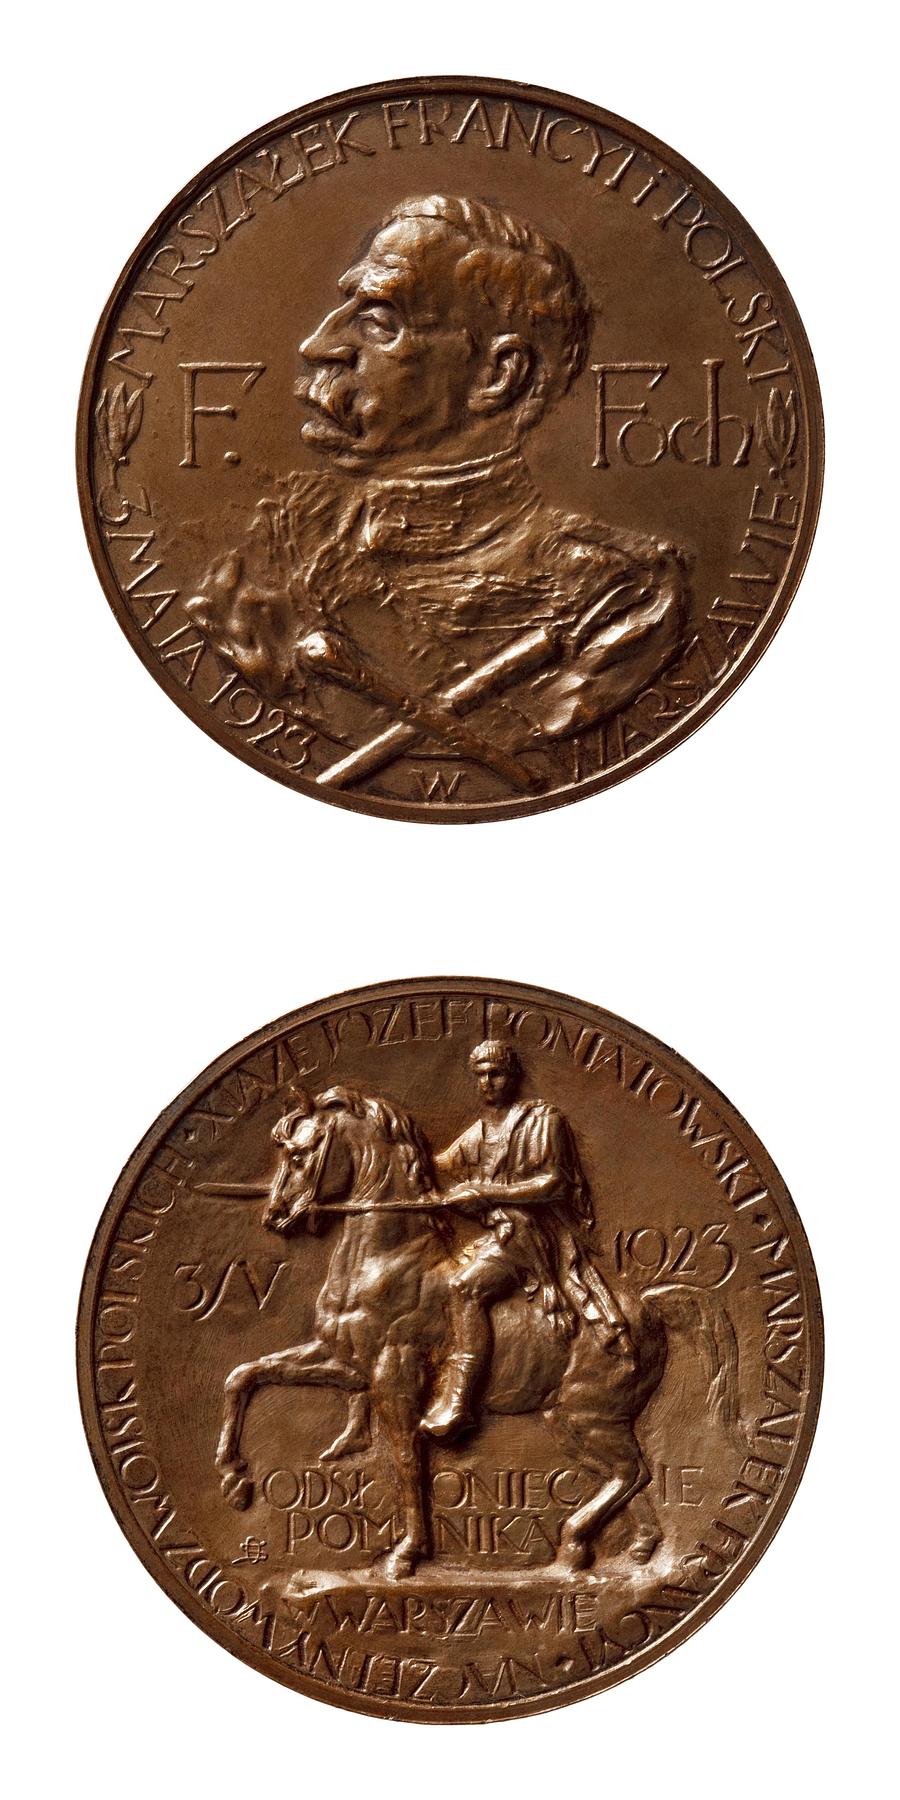 Medaljens forside: Marskal Ferdinand Foch. Medaljens bagside: Józef Poniatowski, F149